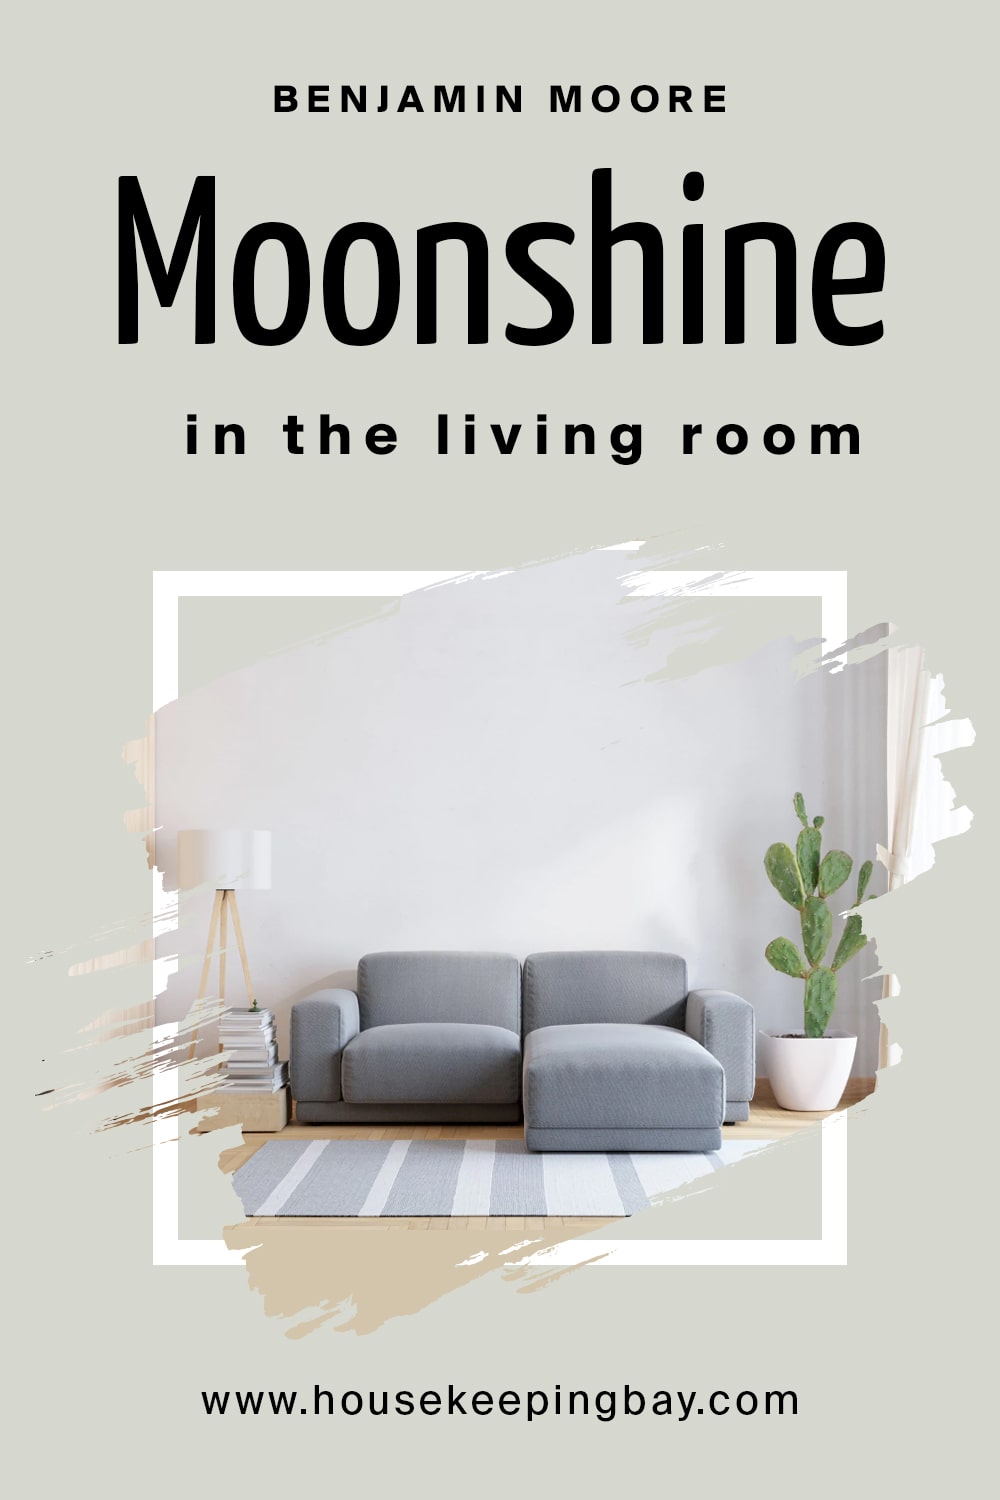 Benjamin Moore. Moonshine in the Living Room